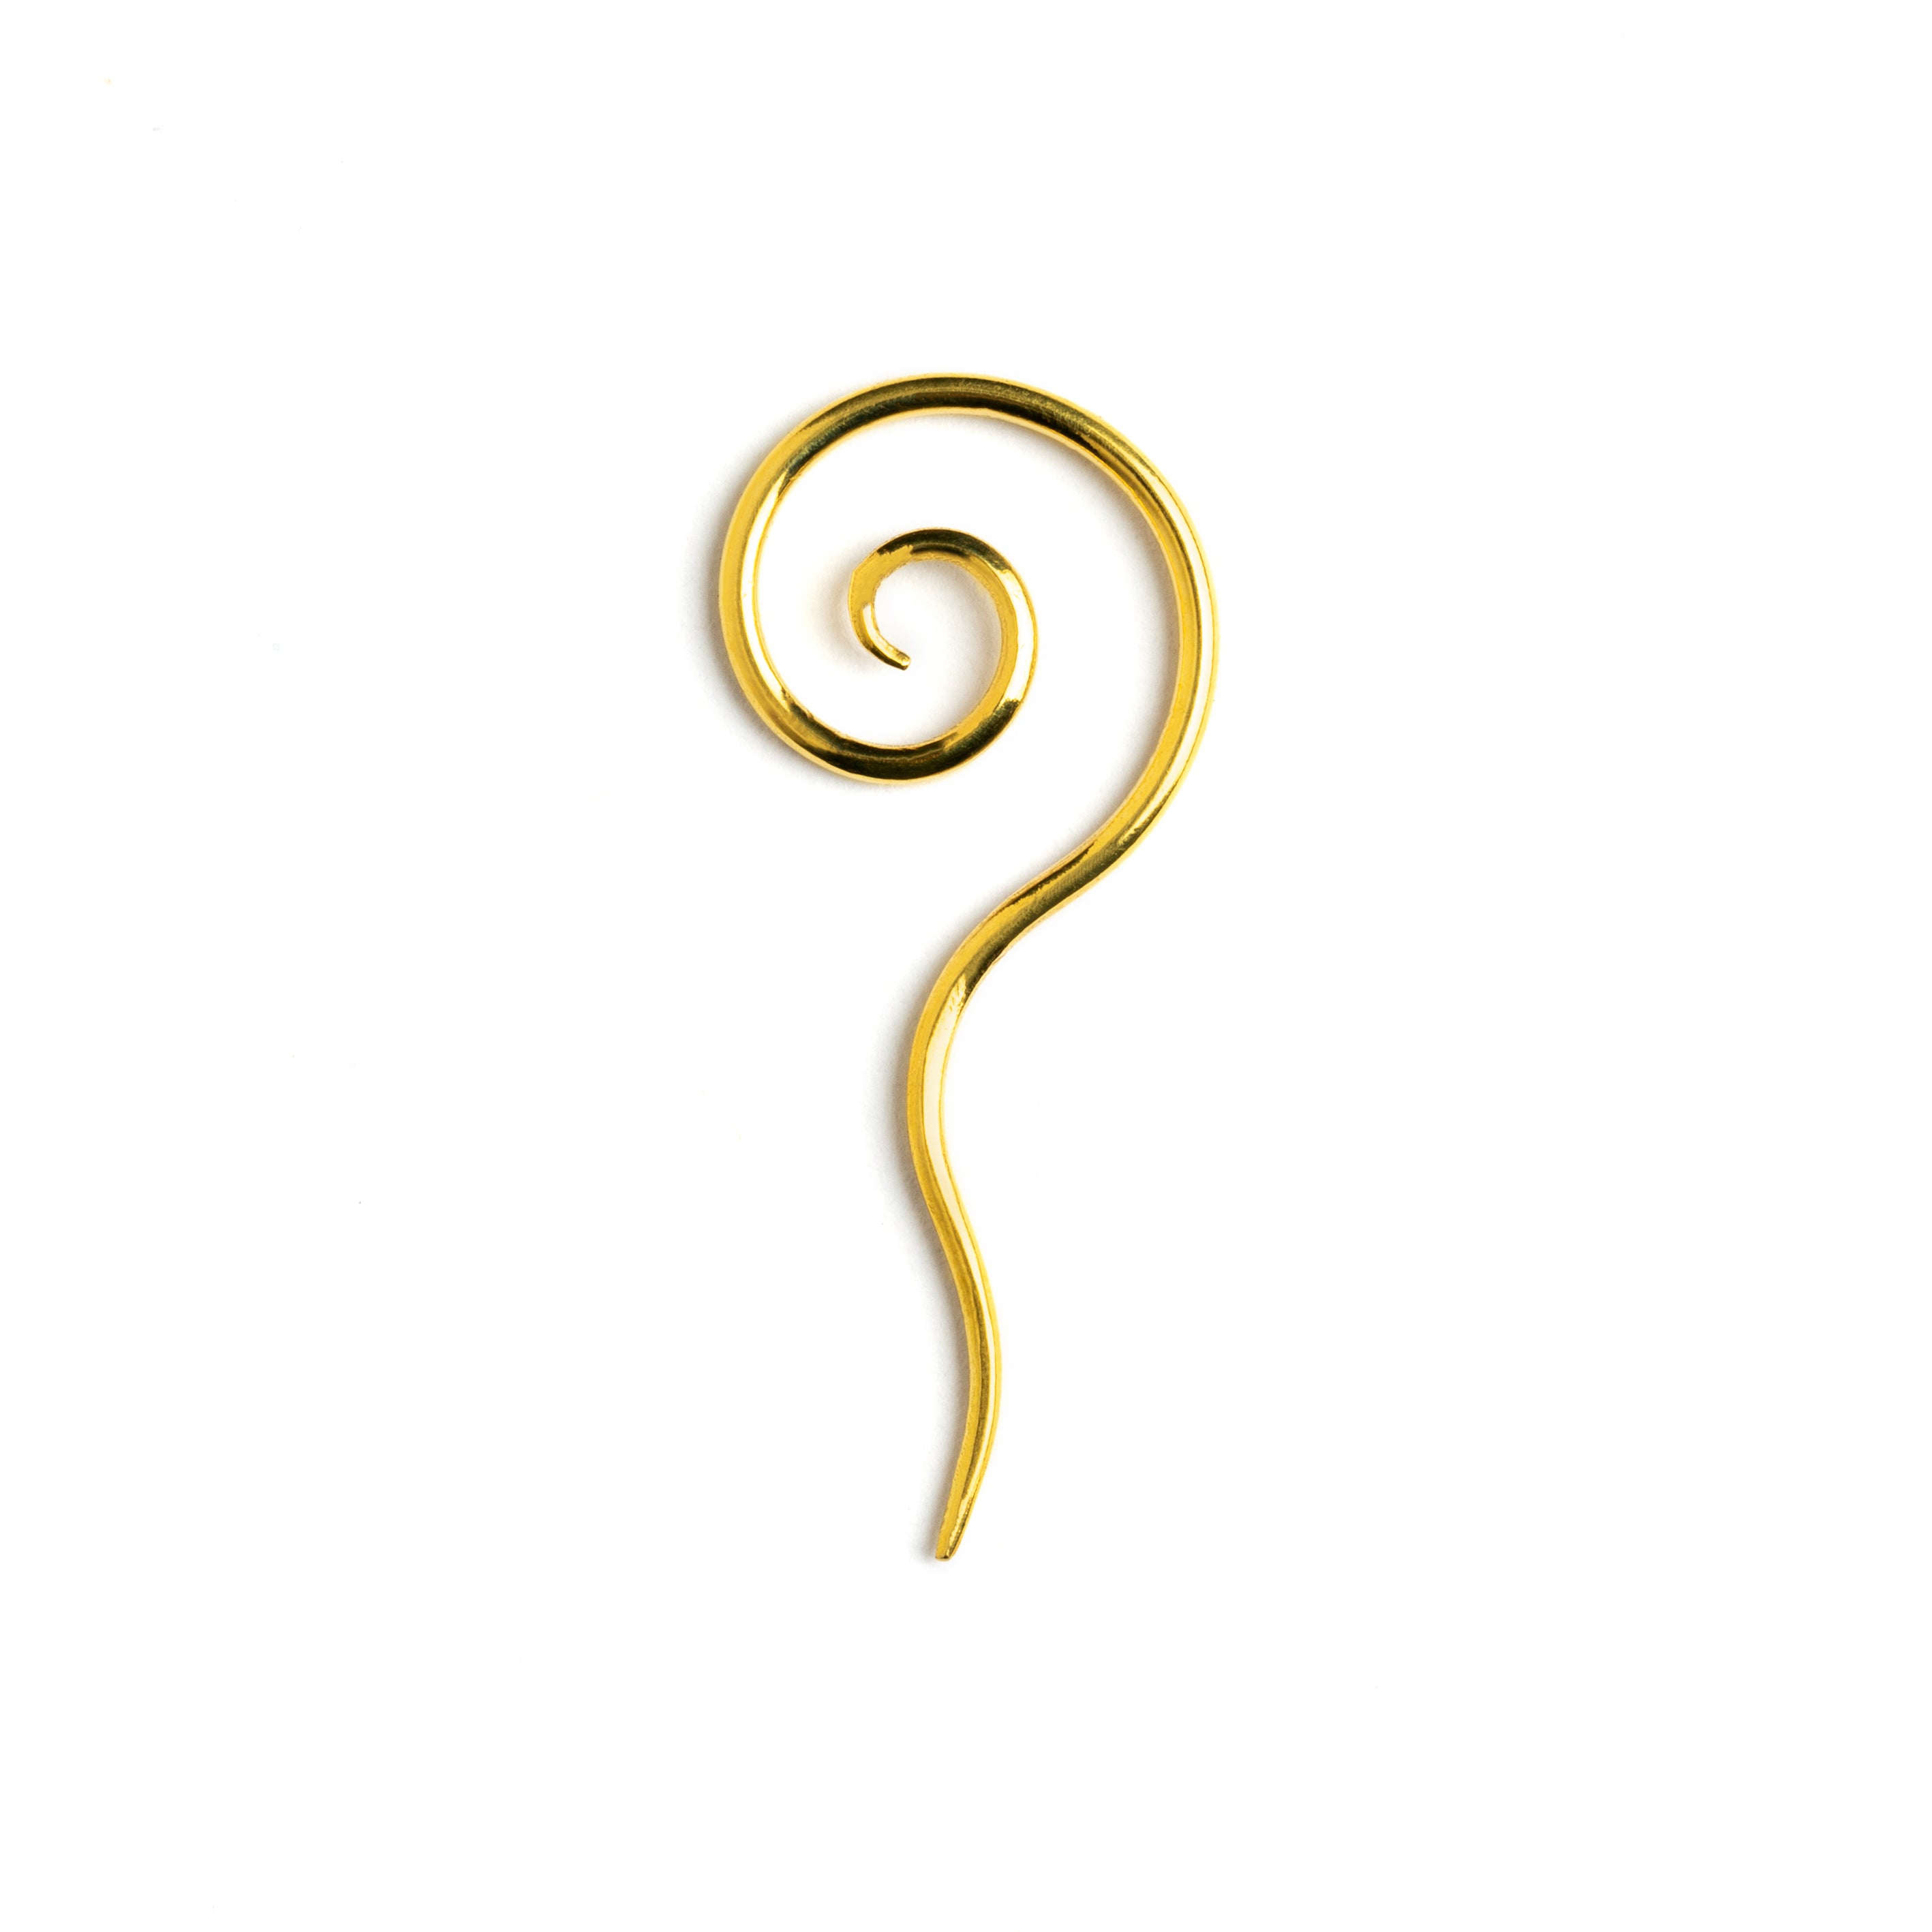 single golden brass wire long tailed spiral hook earring side view